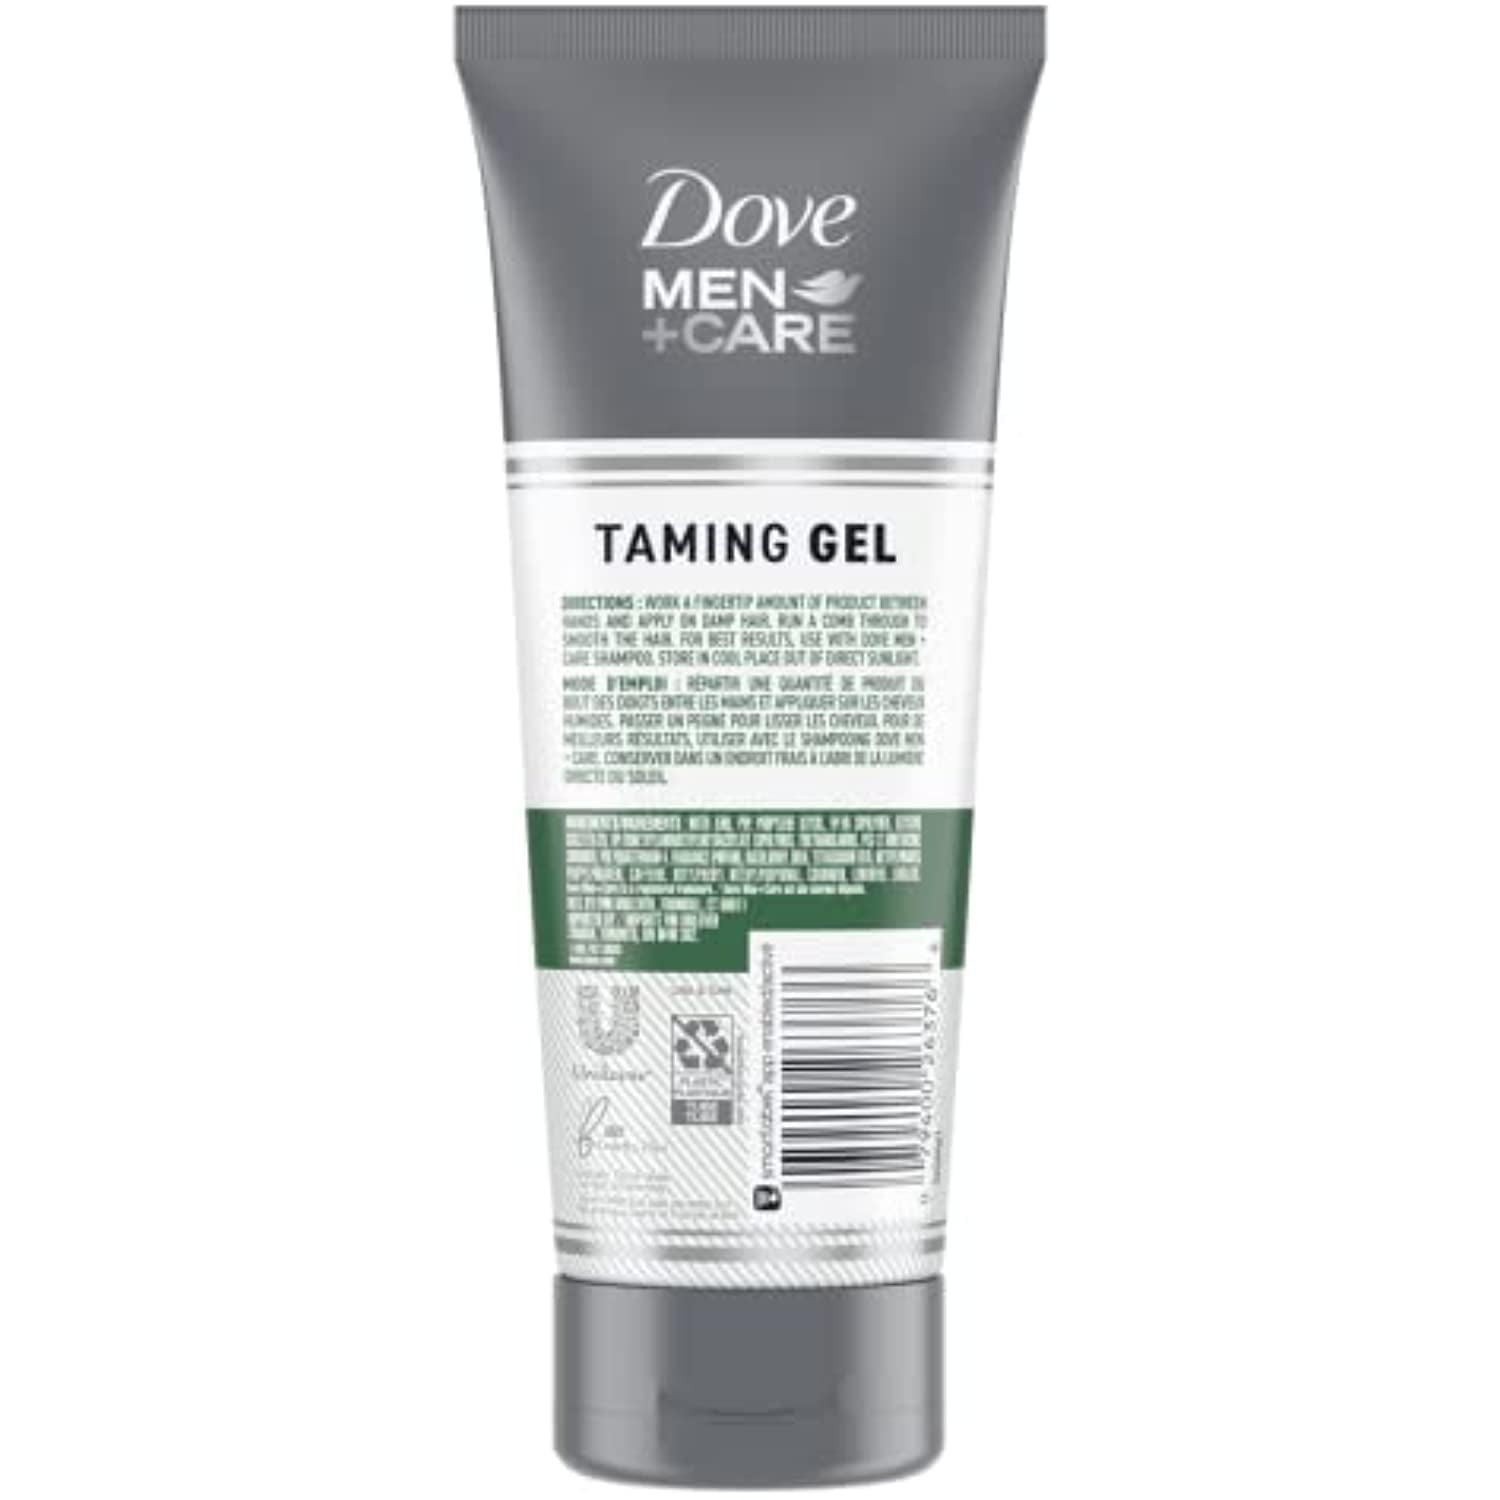 Dove Men+Care Hair Styling Control Gel 7 Oz 